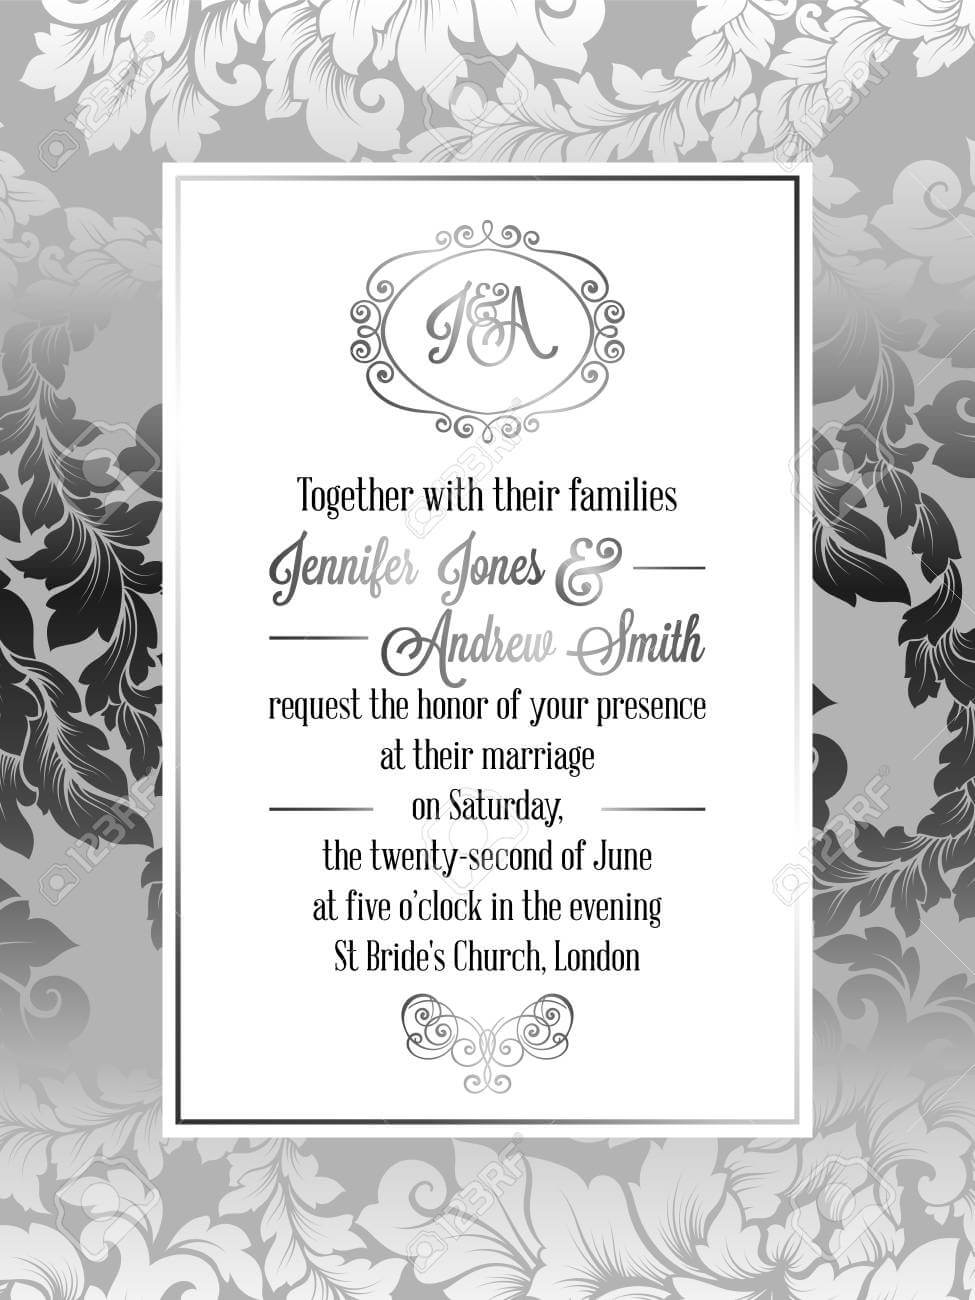 Vintage Baroque Style Wedding Invitation Card Template.. Elegant.. Inside Church Wedding Invitation Card Template